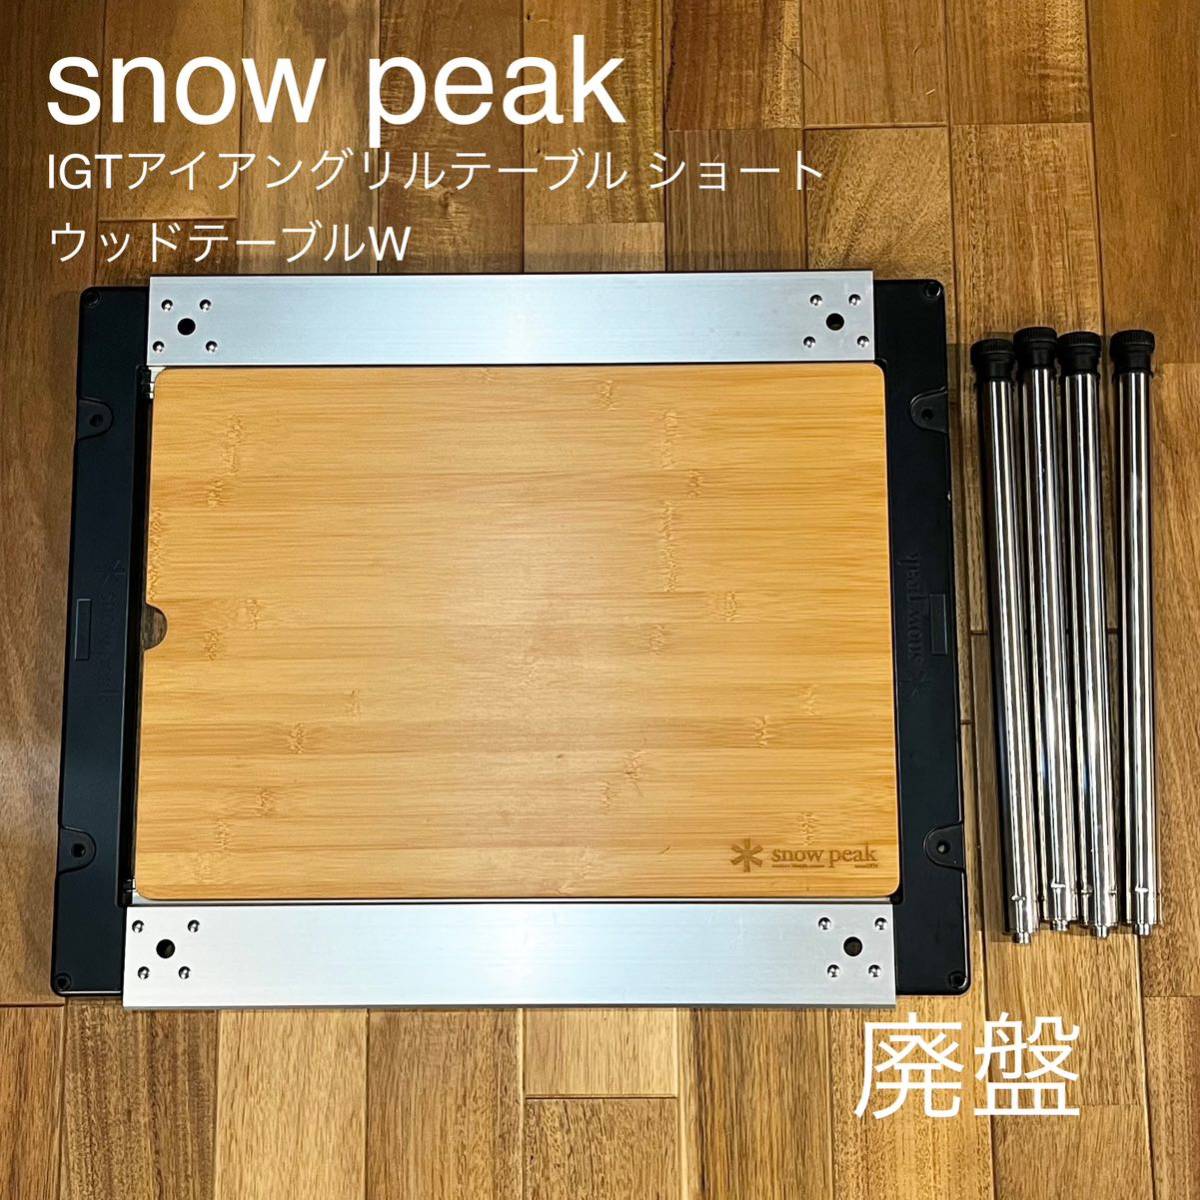 snow peak スノーピーク IGT アイアン グリル テーブル ショート 廃盤 希少 フレーム ユニット_画像1